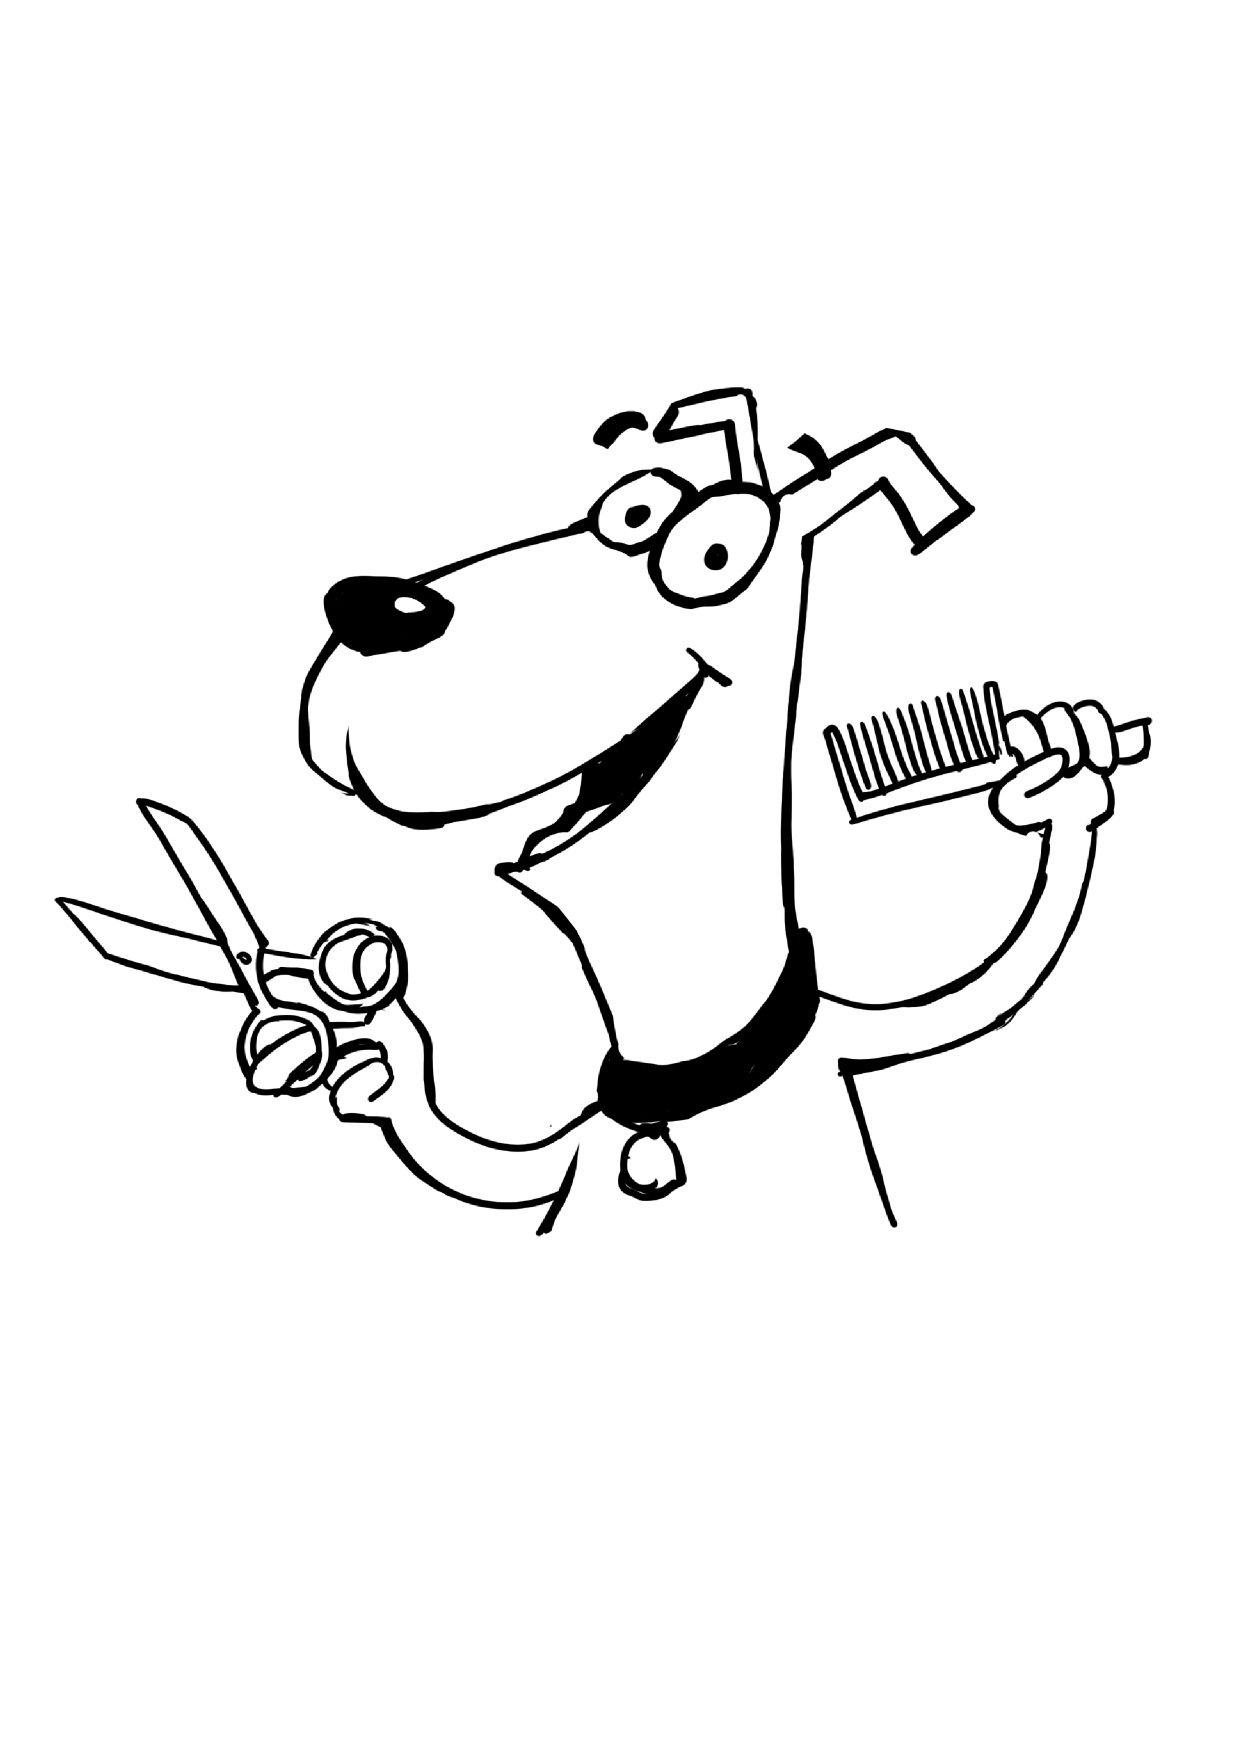 Psi fryzjer - salon groomerski!